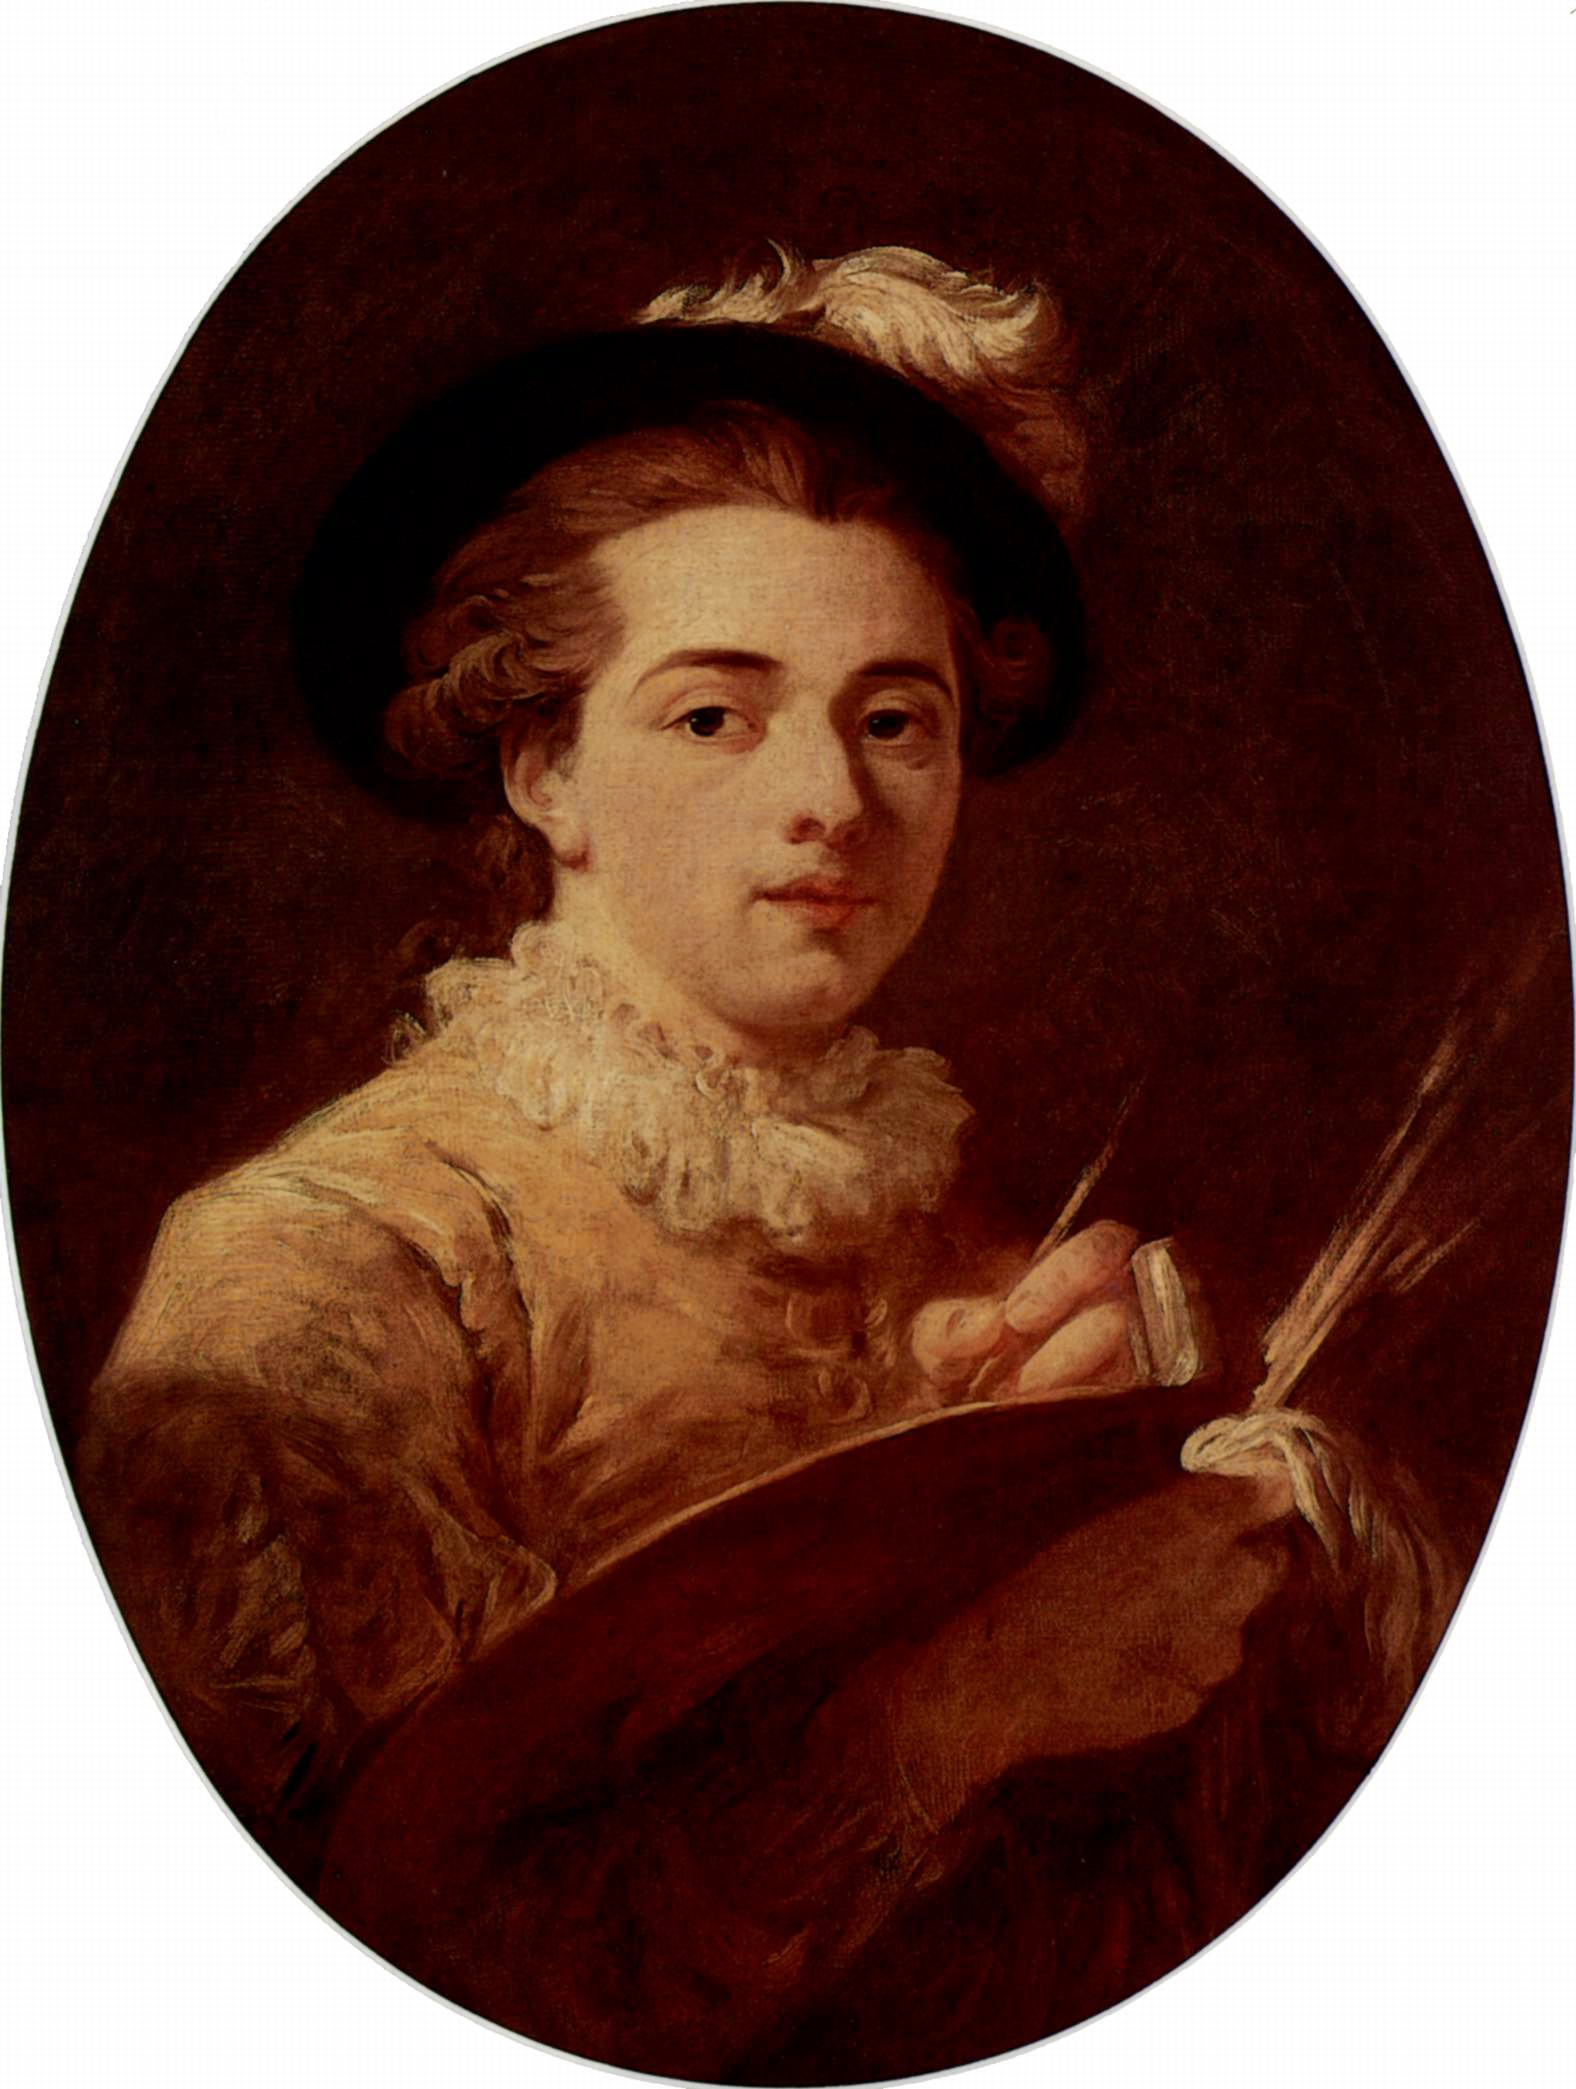 Jean-Honoré Fragonard - April 4, 1732 - August 22, 1806